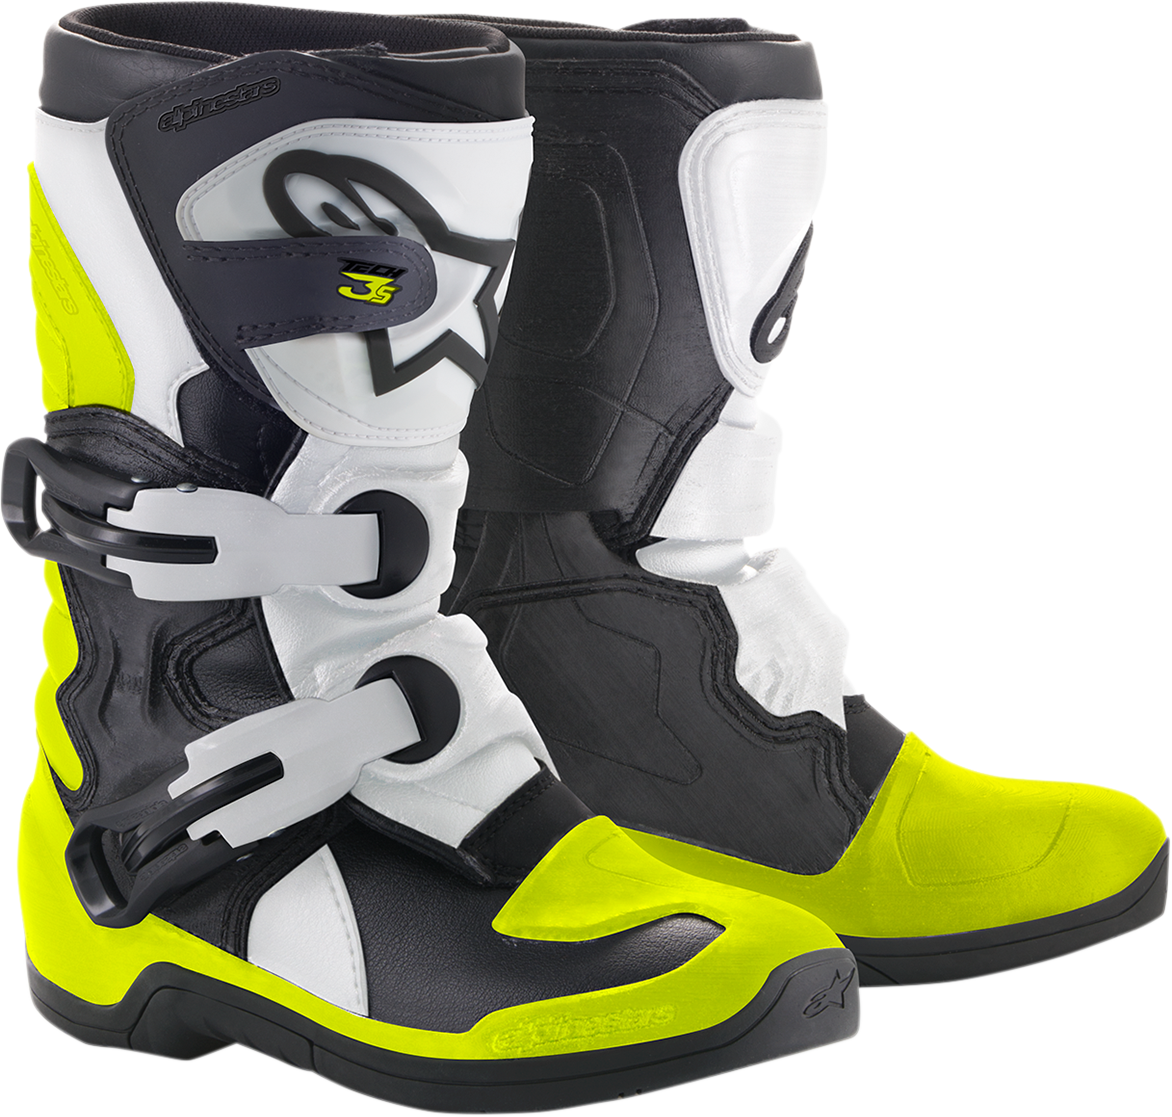 ALPINESTARS Youth Tech 3S Boots - Black/White/Yellow - US 10 2014518-125-10